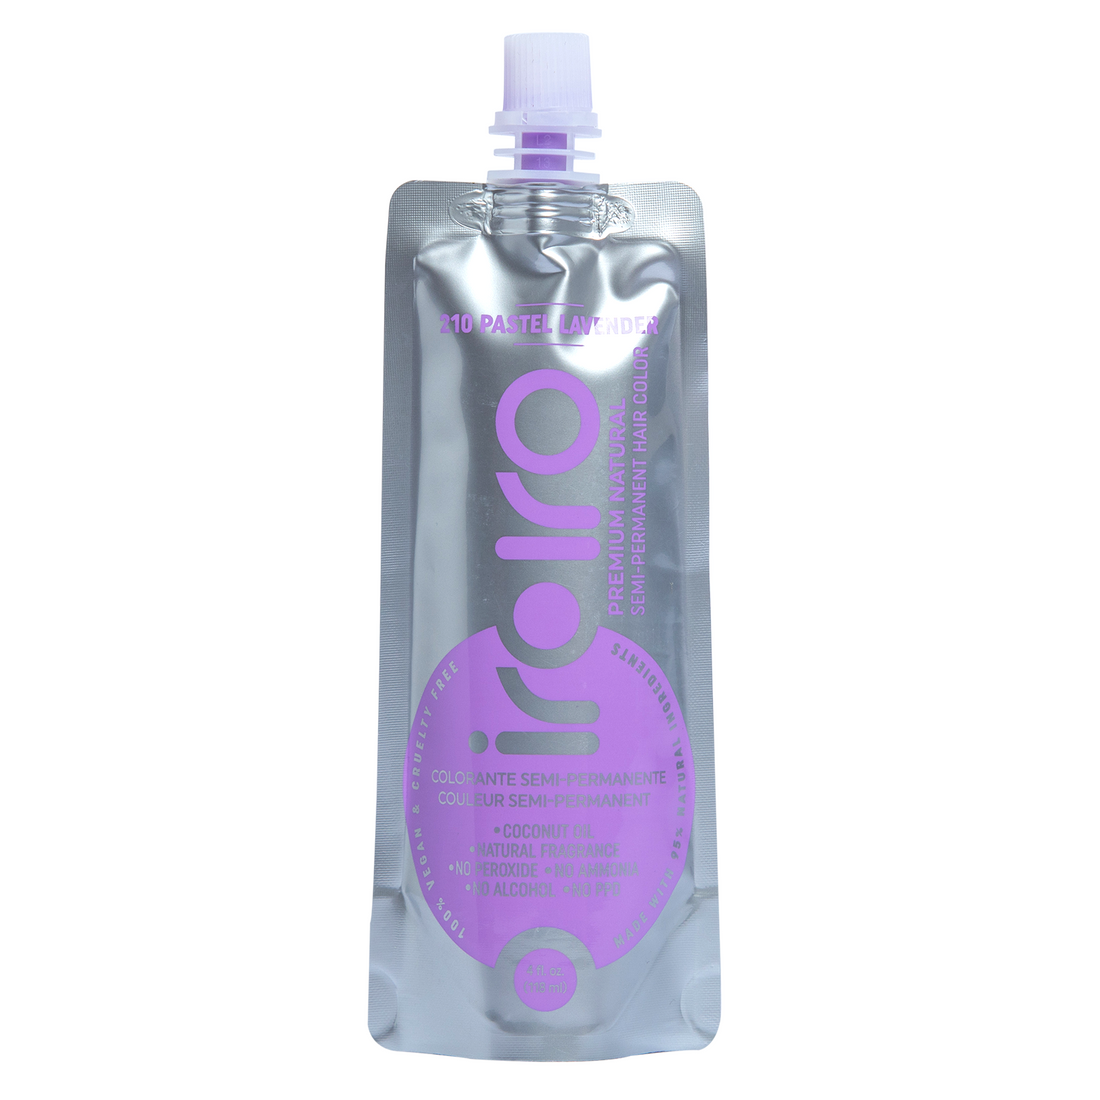 Iroiro 210 Lavender Pastel Vegan Cruelty-Free Semi-Permanent Hair Color